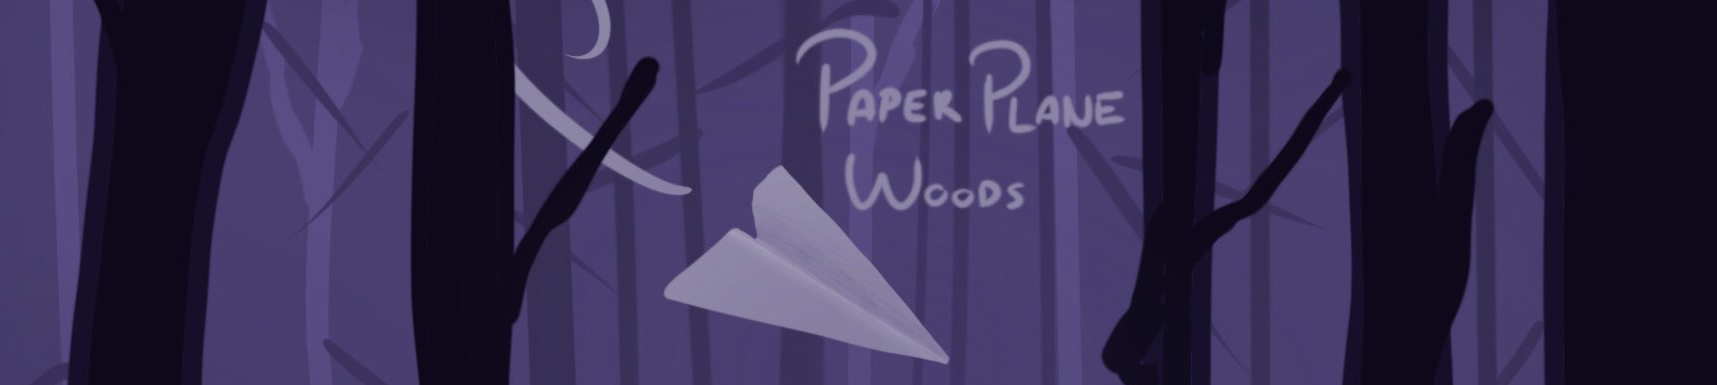 Paper Plane Woods